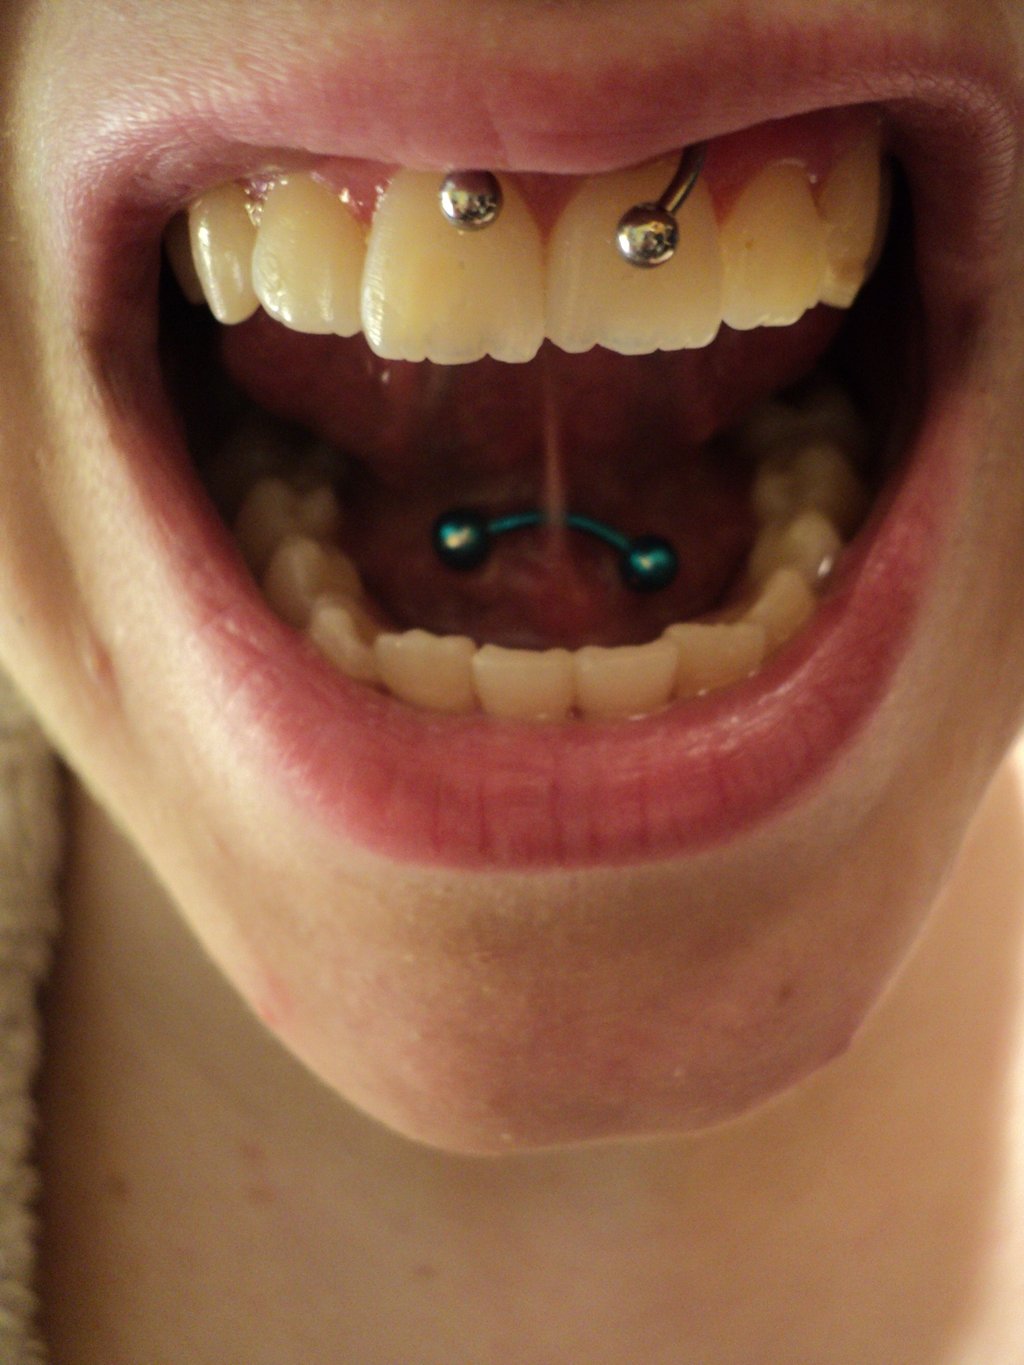 Lip Frenulum And Tongue Web Piercing by Luckyjellyfish